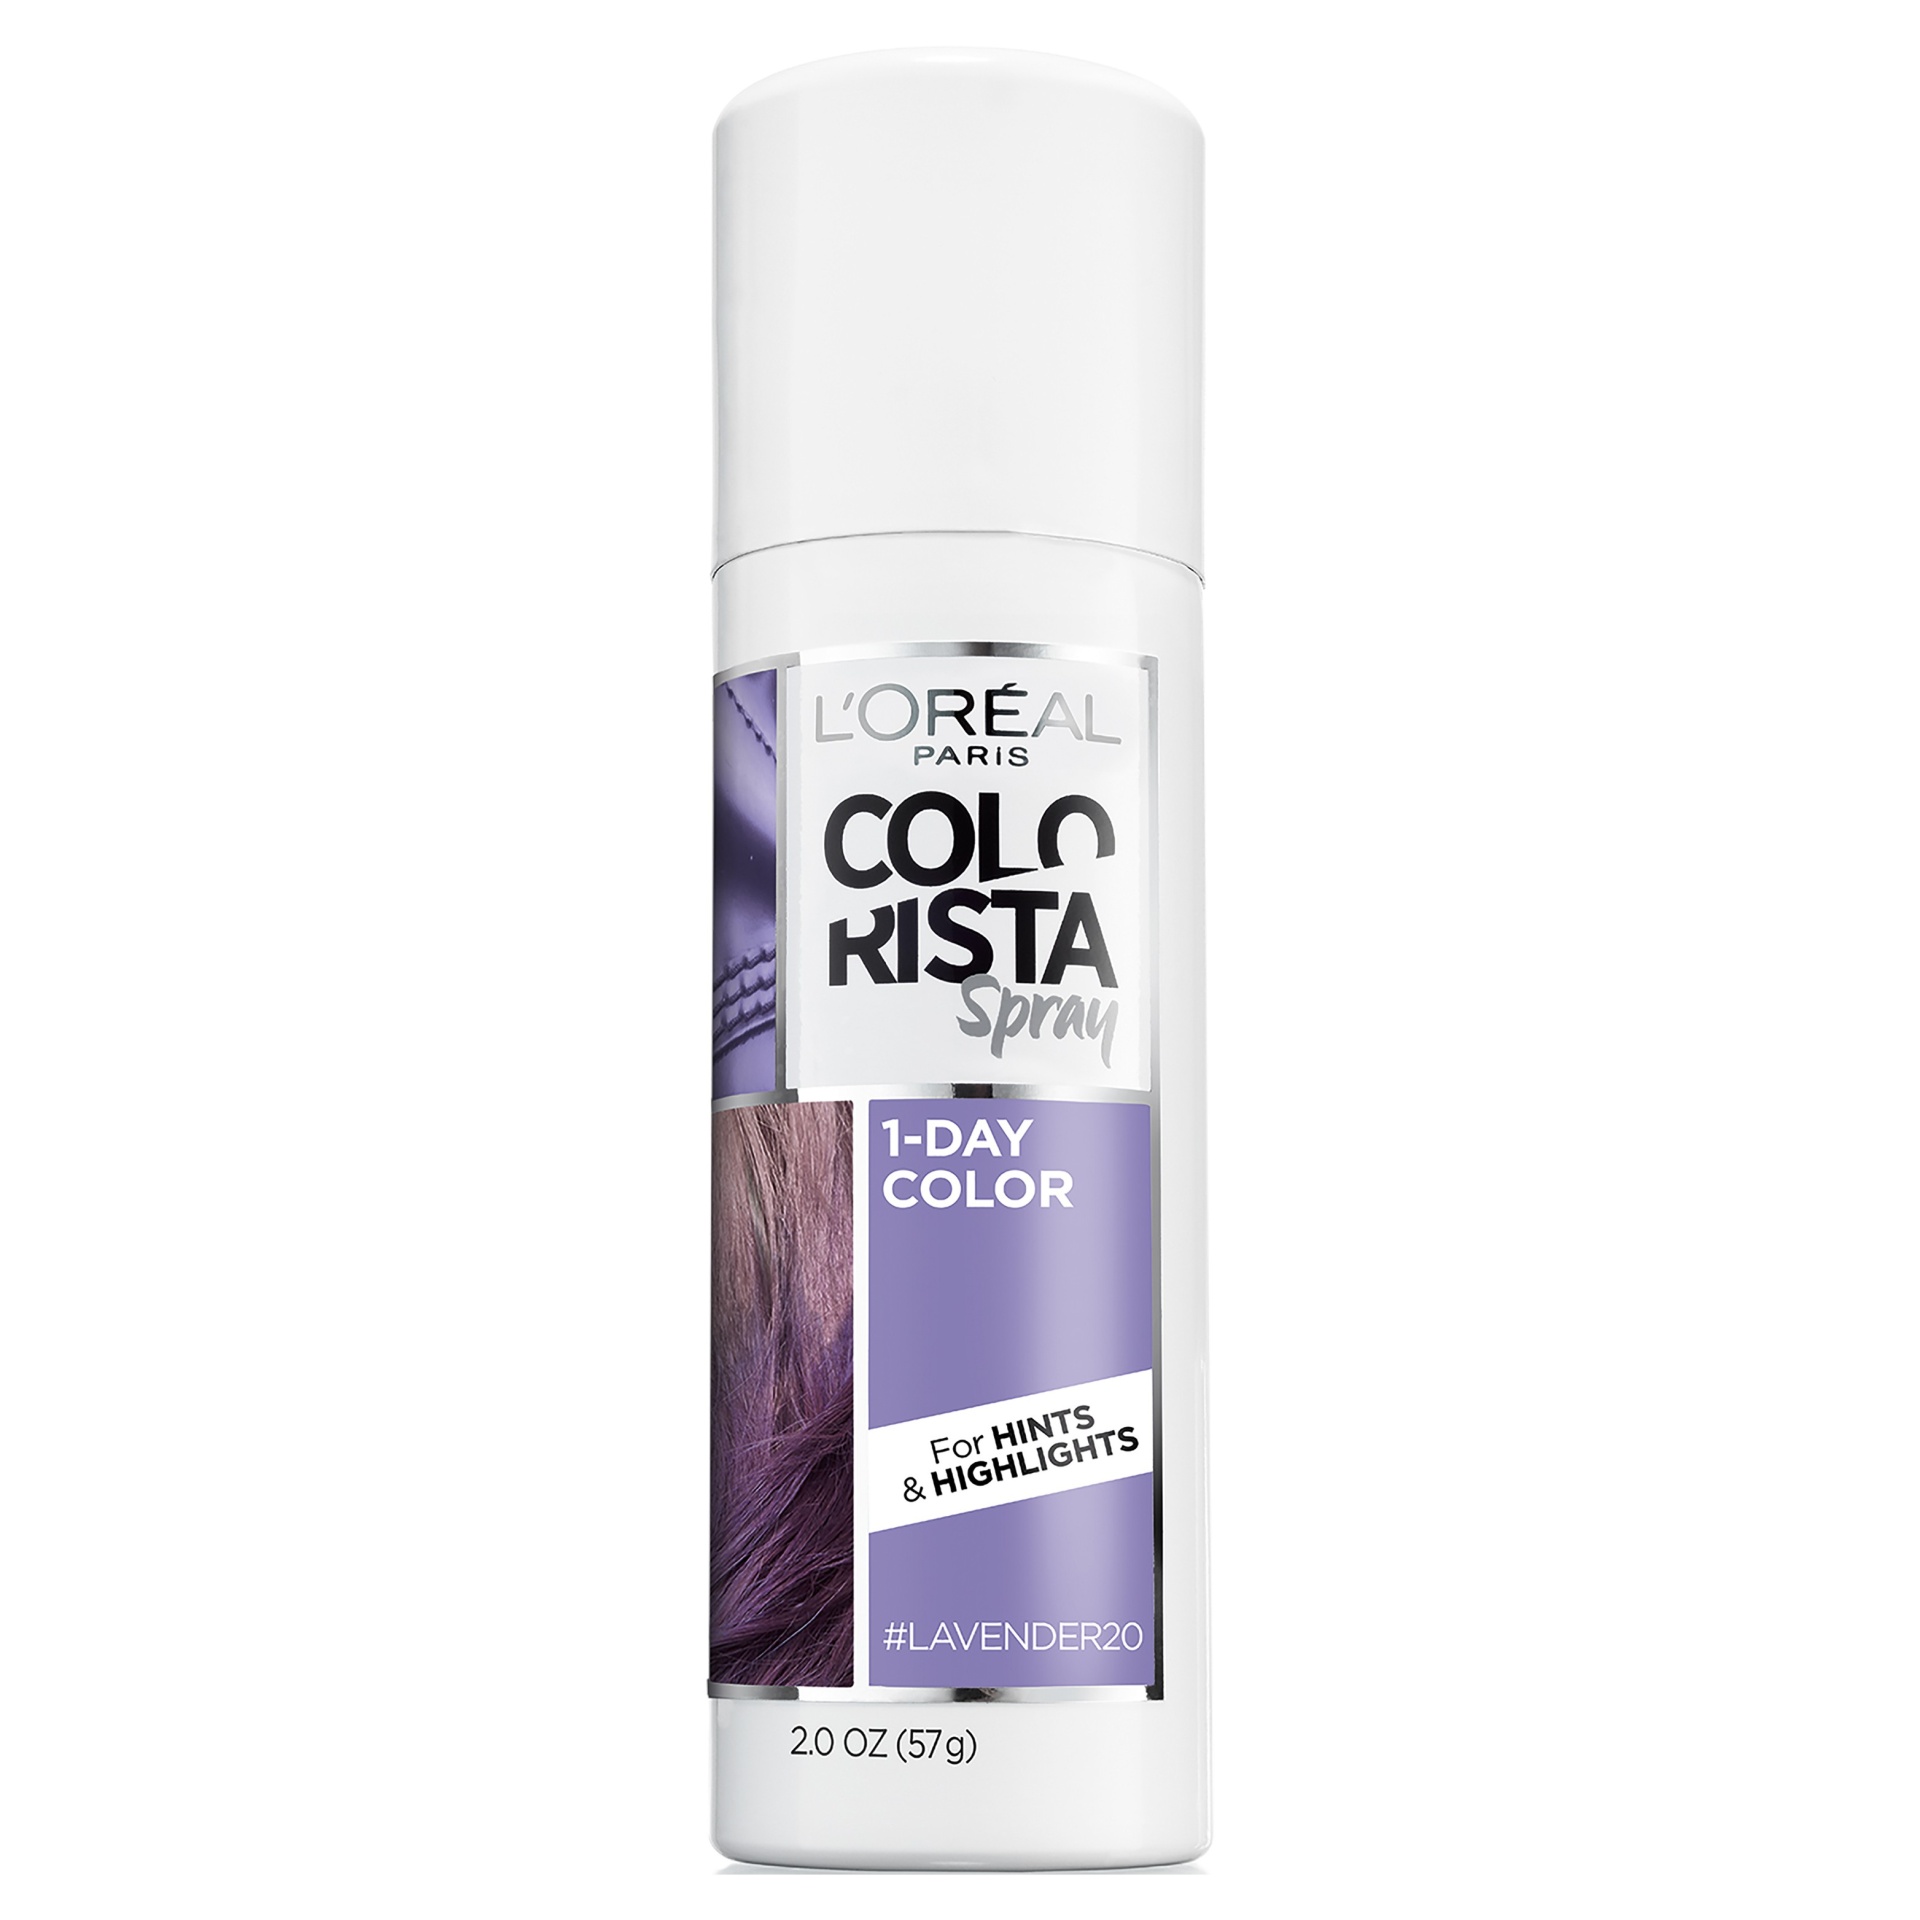 slide 1 of 5, L'Oréal Colo Rista Spray 1 Day Color #Lavender20, 2 oz